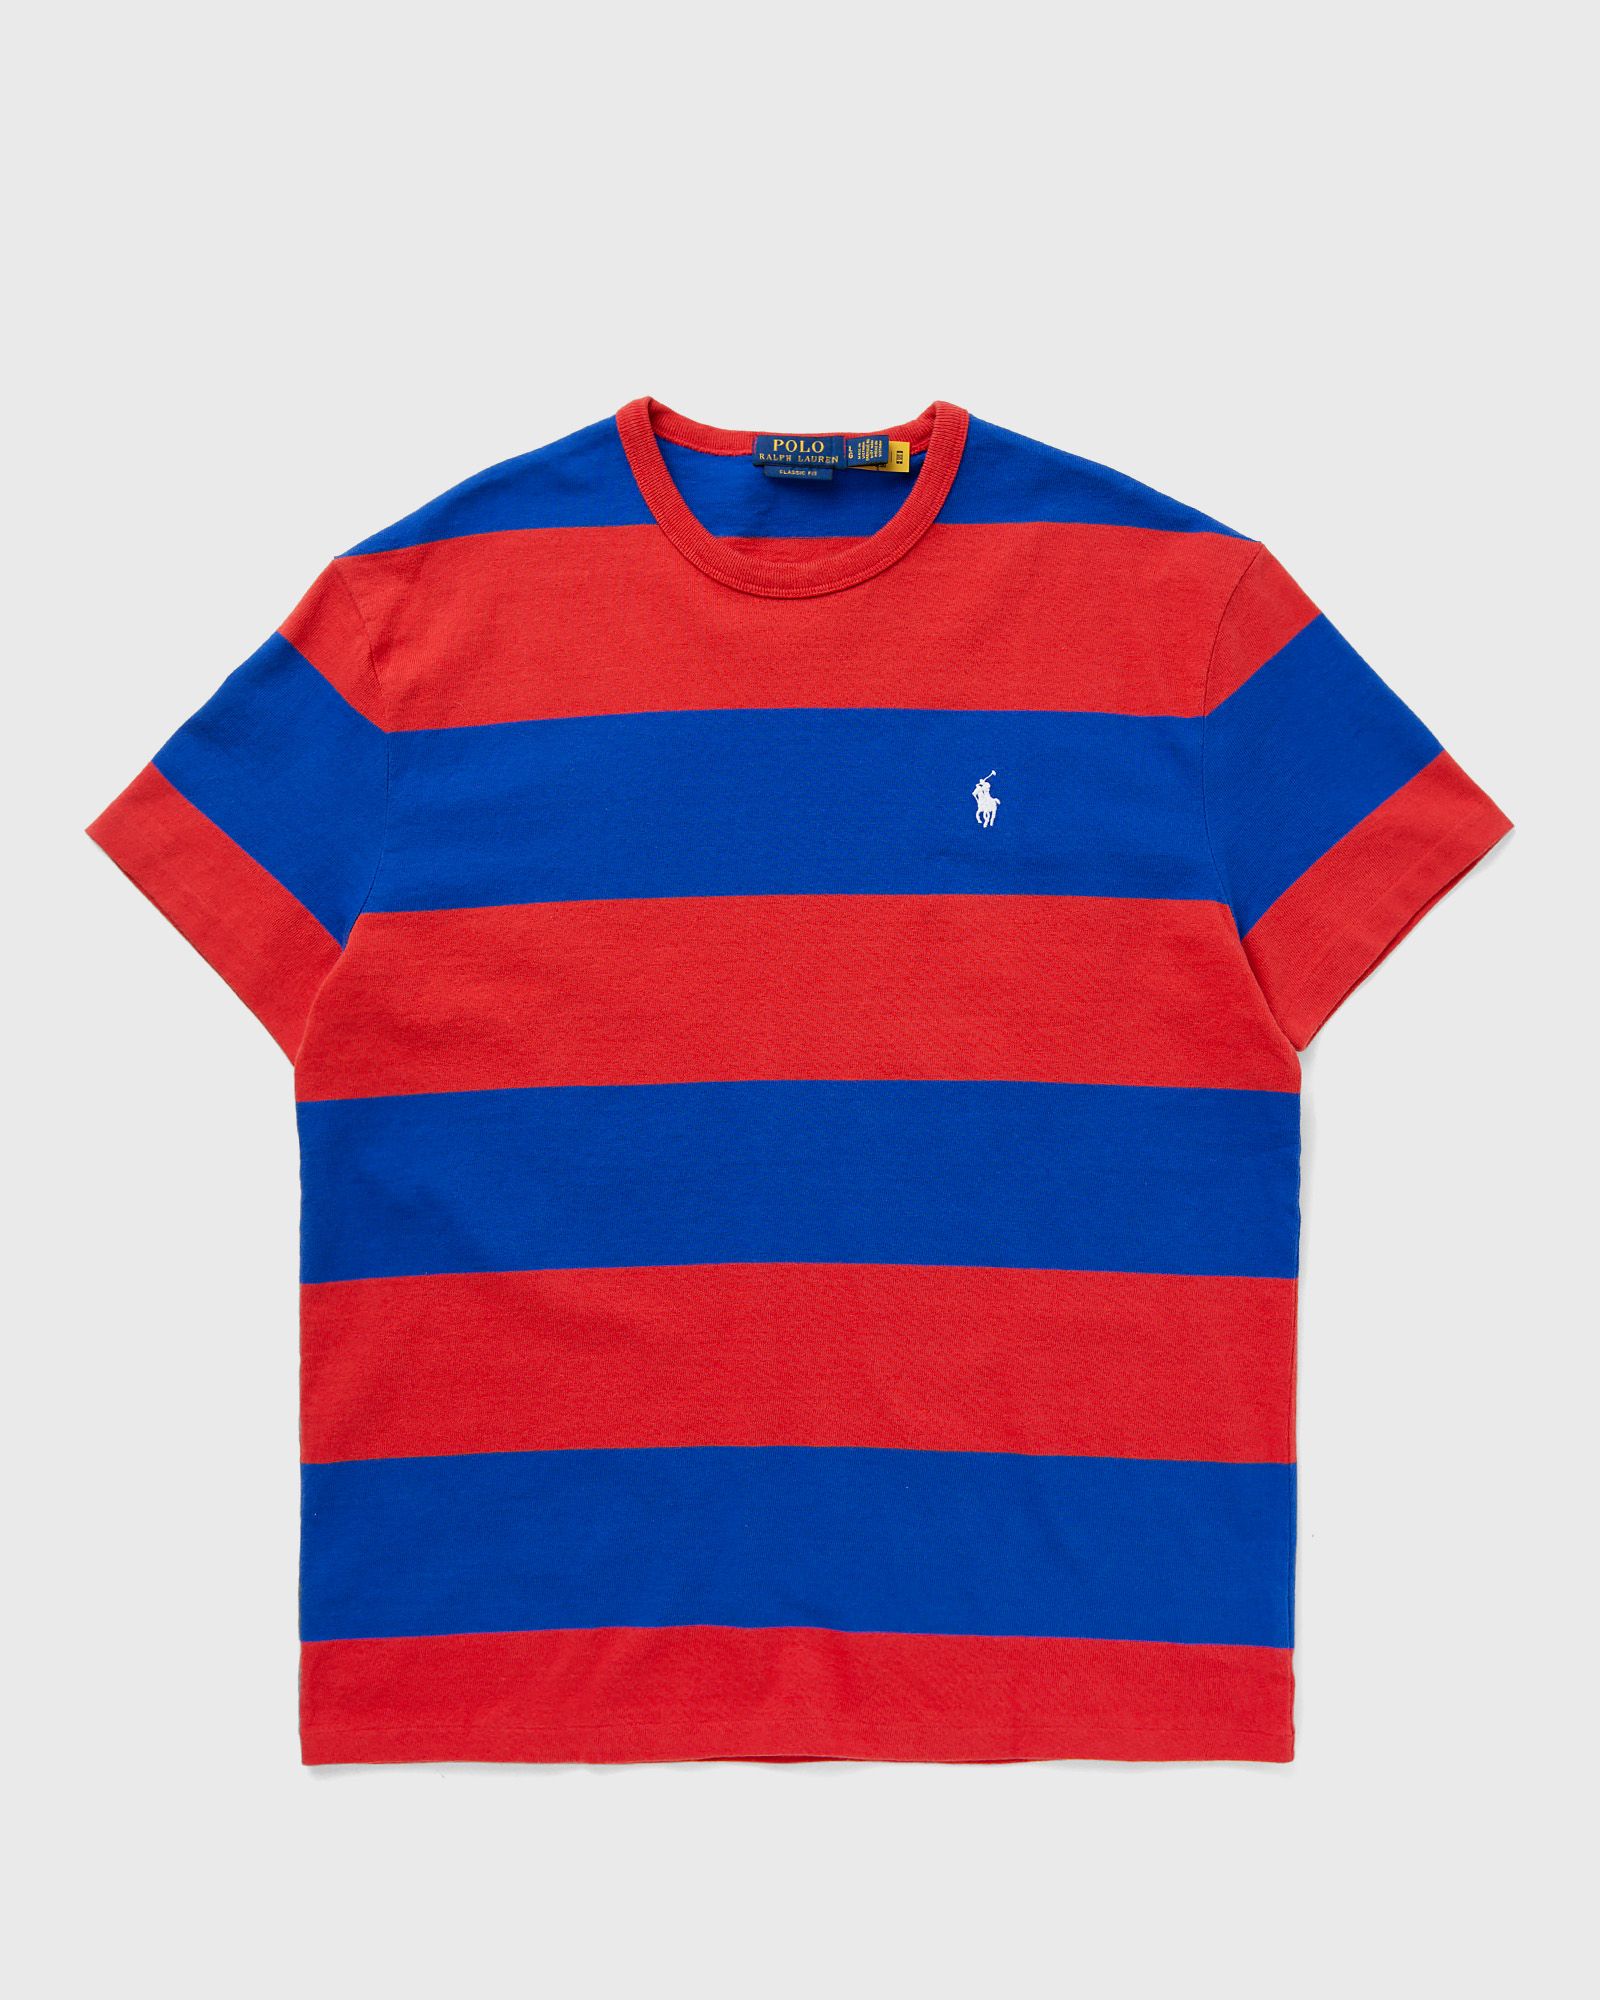 Polo Ralph Lauren - short sleeve-tee men shortsleeves blue|red in größe:xl